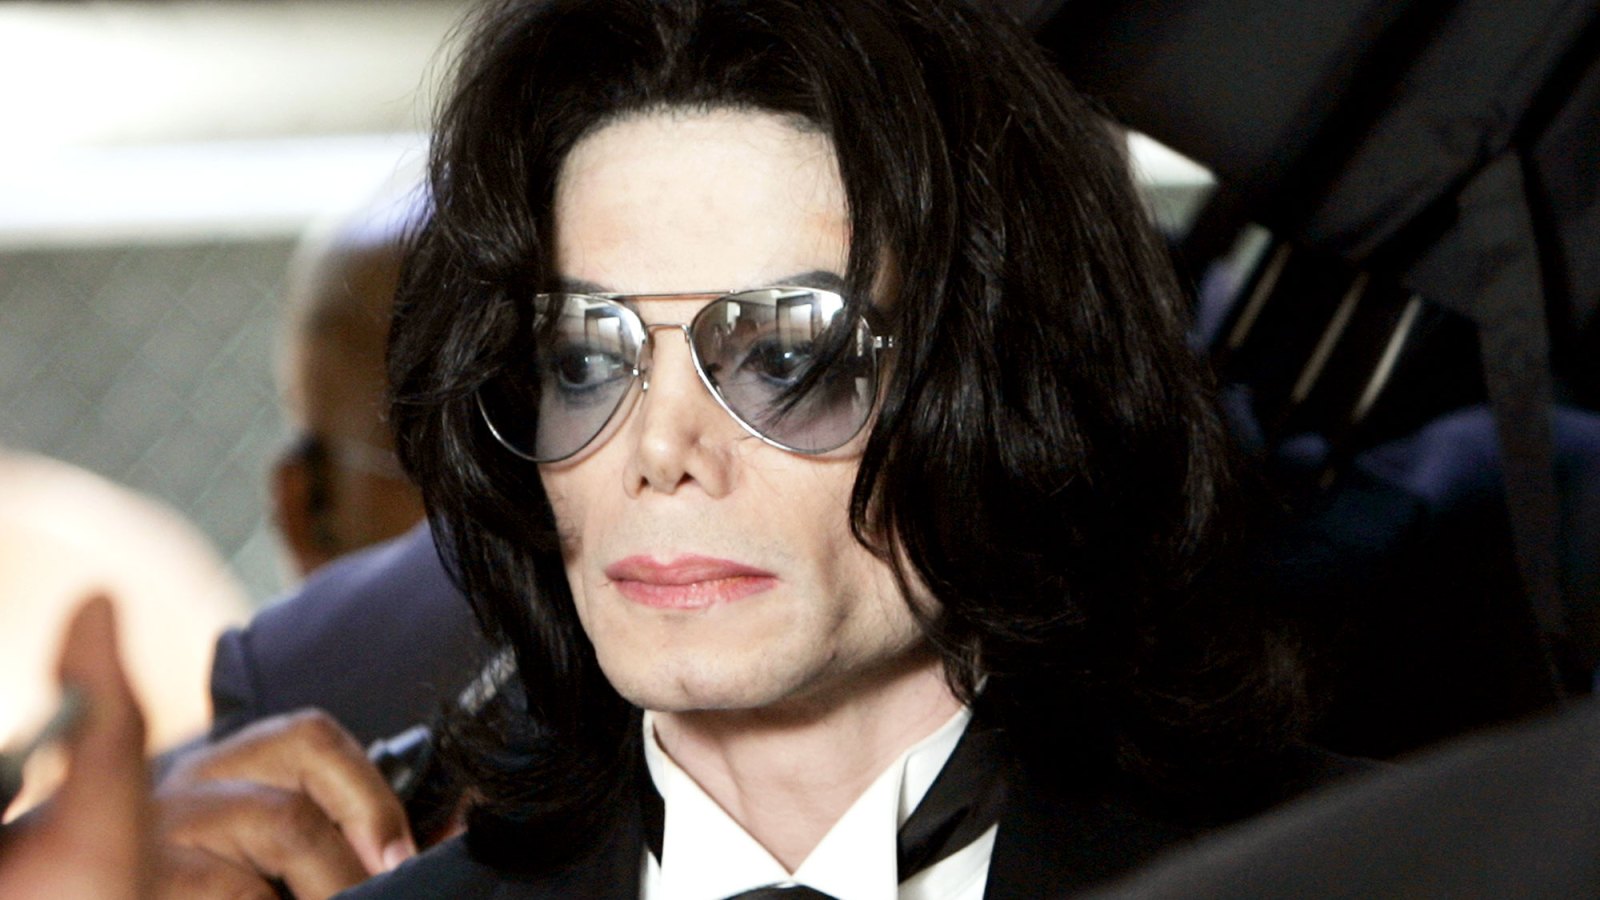 Michael Jackson’s Estate Sues HBO for $100 Million Over ‘Leaving Neverland’ Documentary: Report